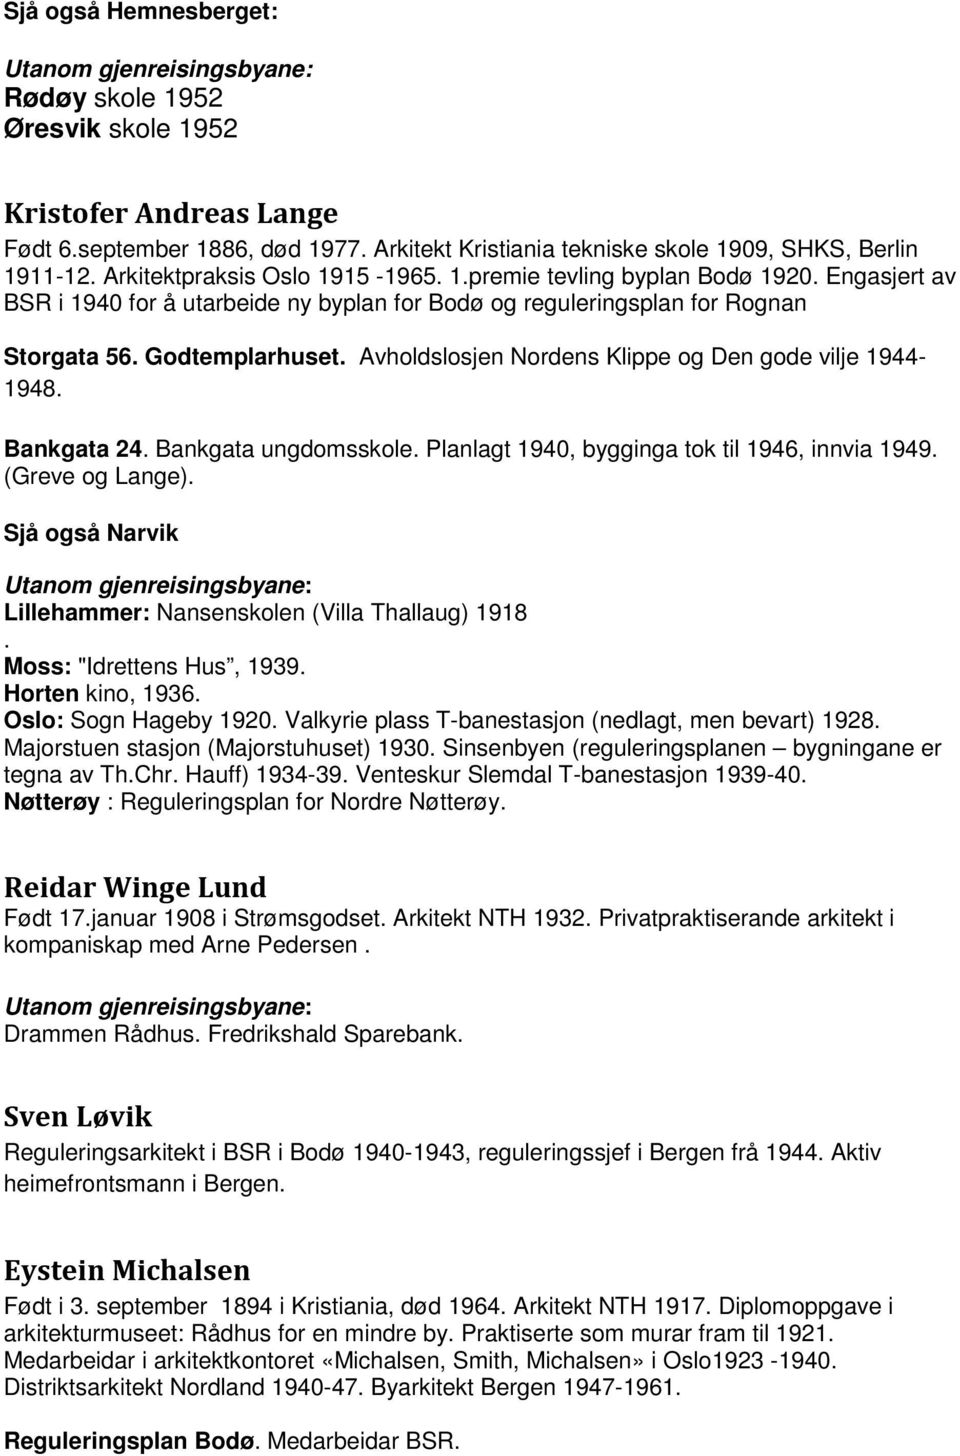 Avholdslosjen Nordens Klippe og Den gode vilje 1944-1948. Bankgata 24. Bankgata ungdomsskole. Planlagt 1940, bygginga tok til 1946, innvia 1949. (Greve og Lange).